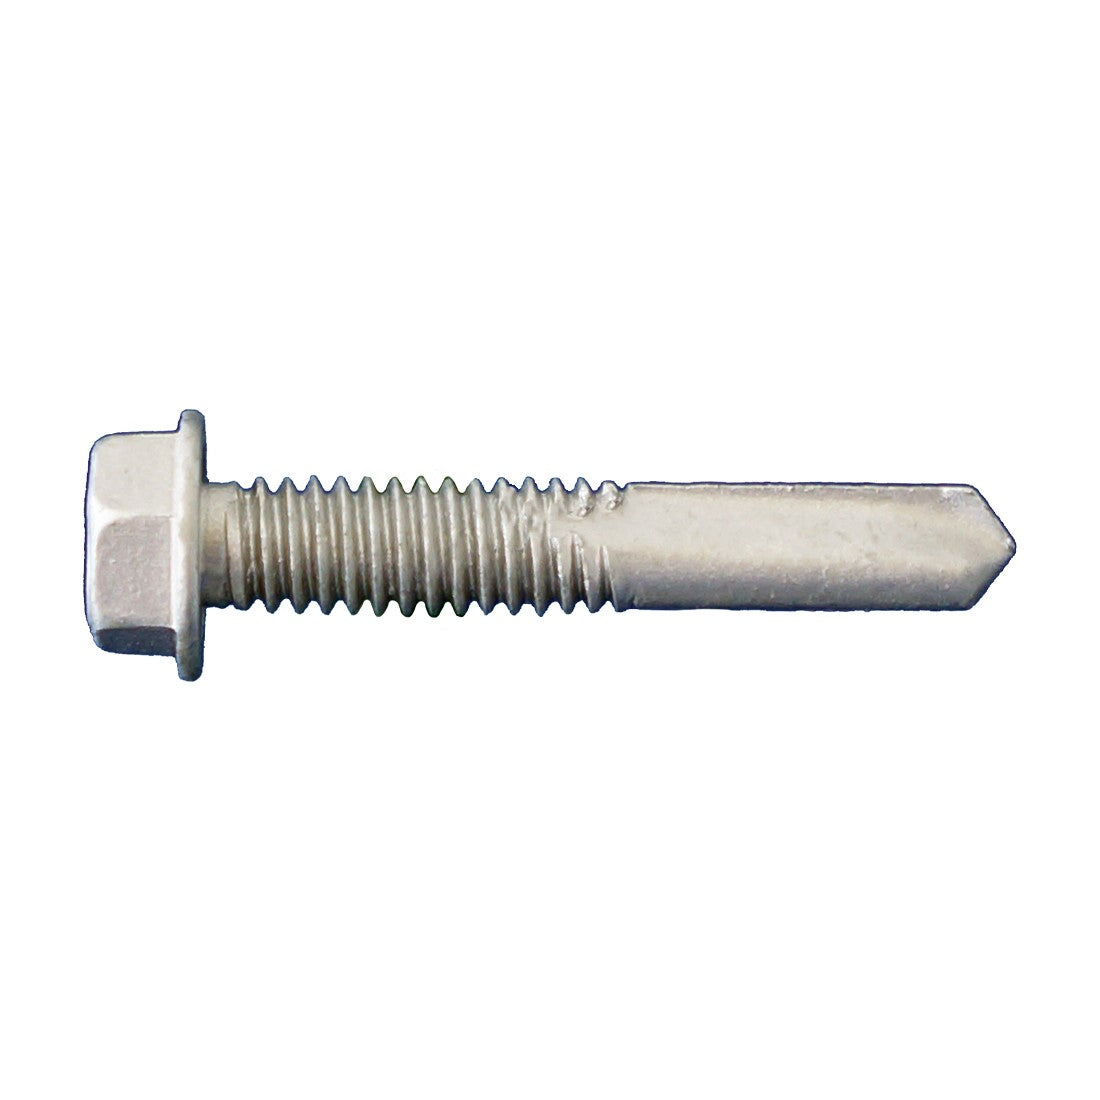 14 inch20 x 4 inch SelfDrilling Metal Screw w#5 Point Hex Head DaggerGuard Coating Pkg 500